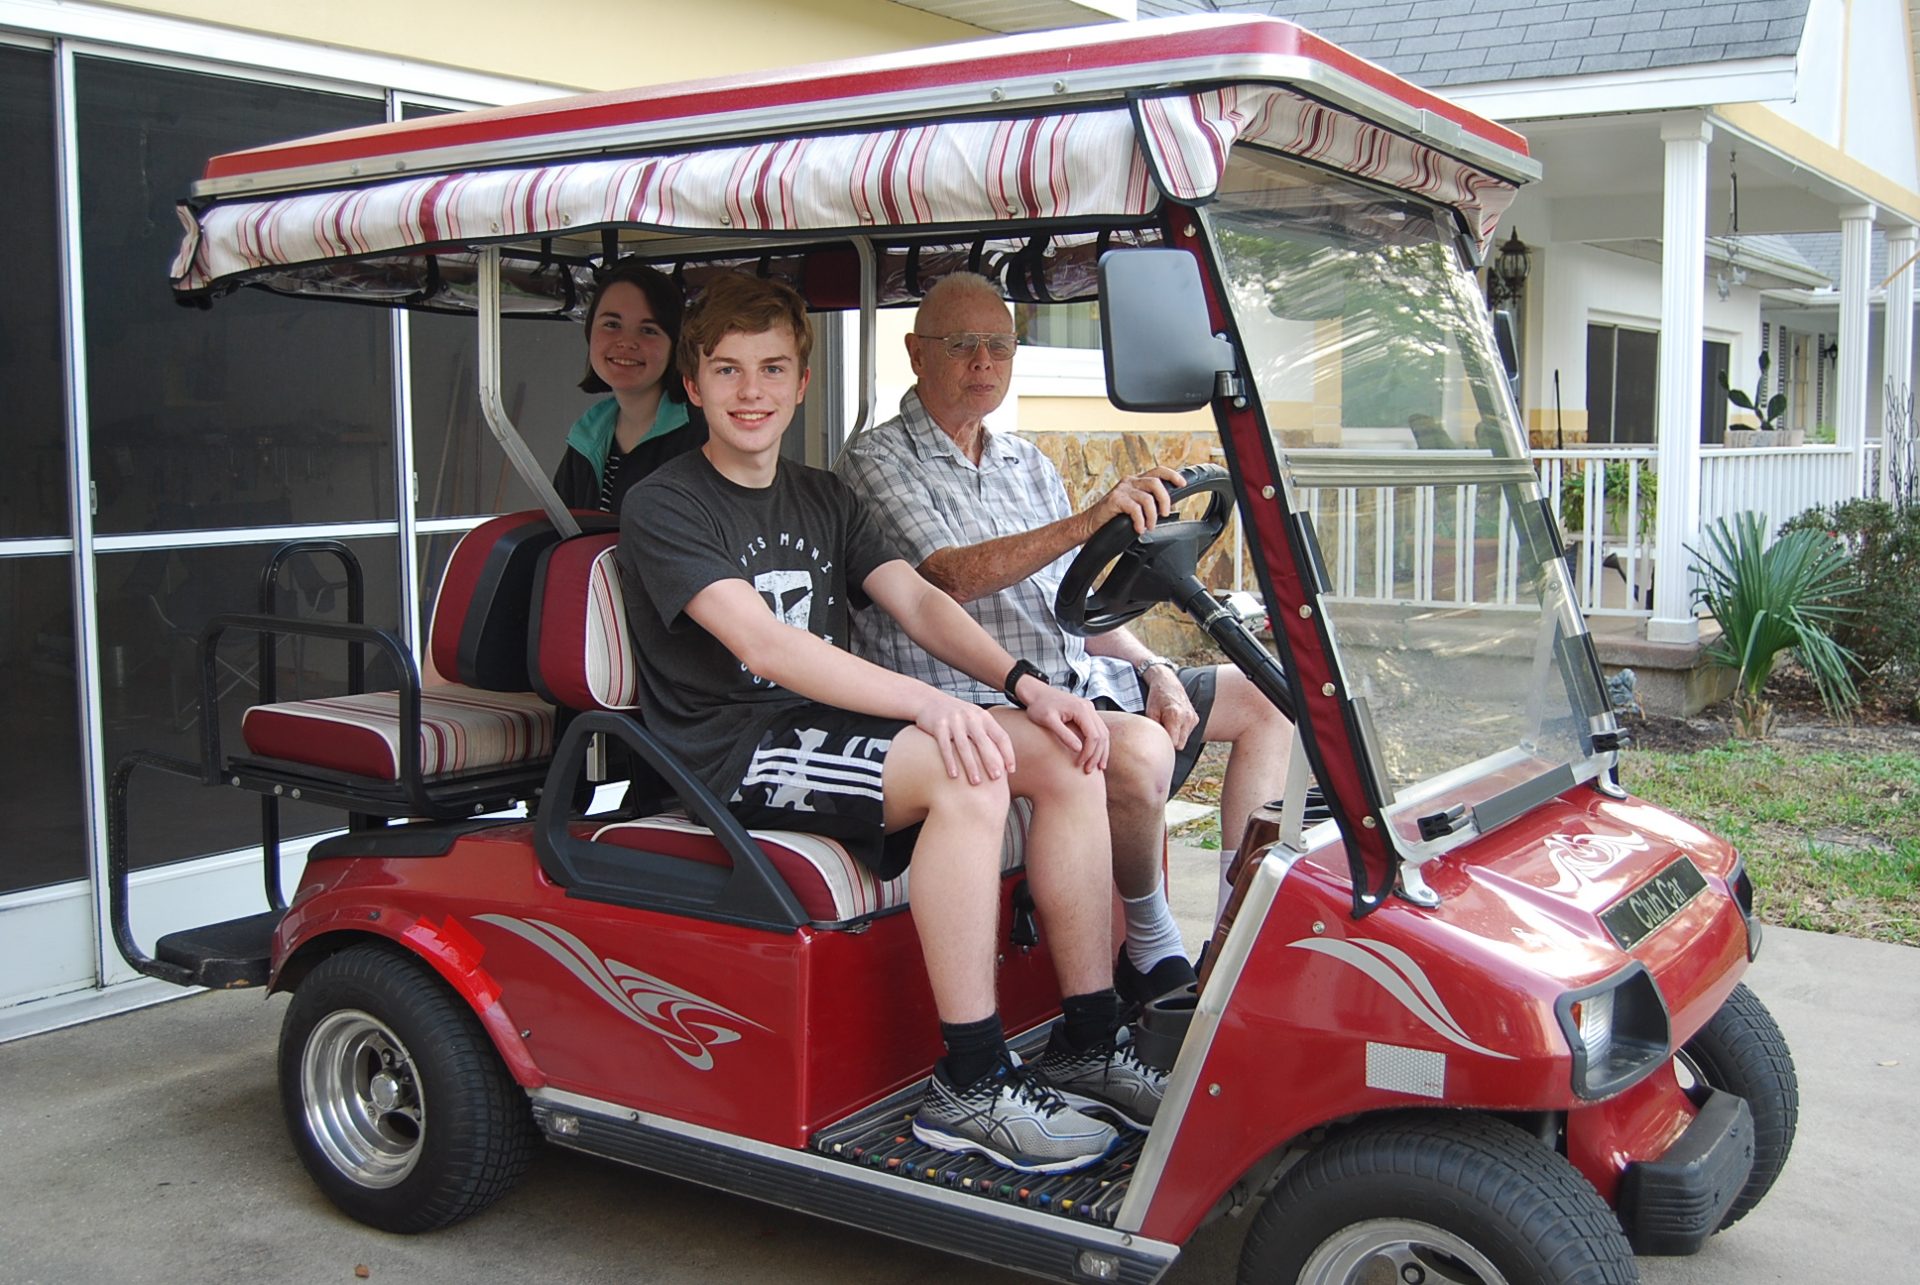 Having fun on Grandpa's golf cart